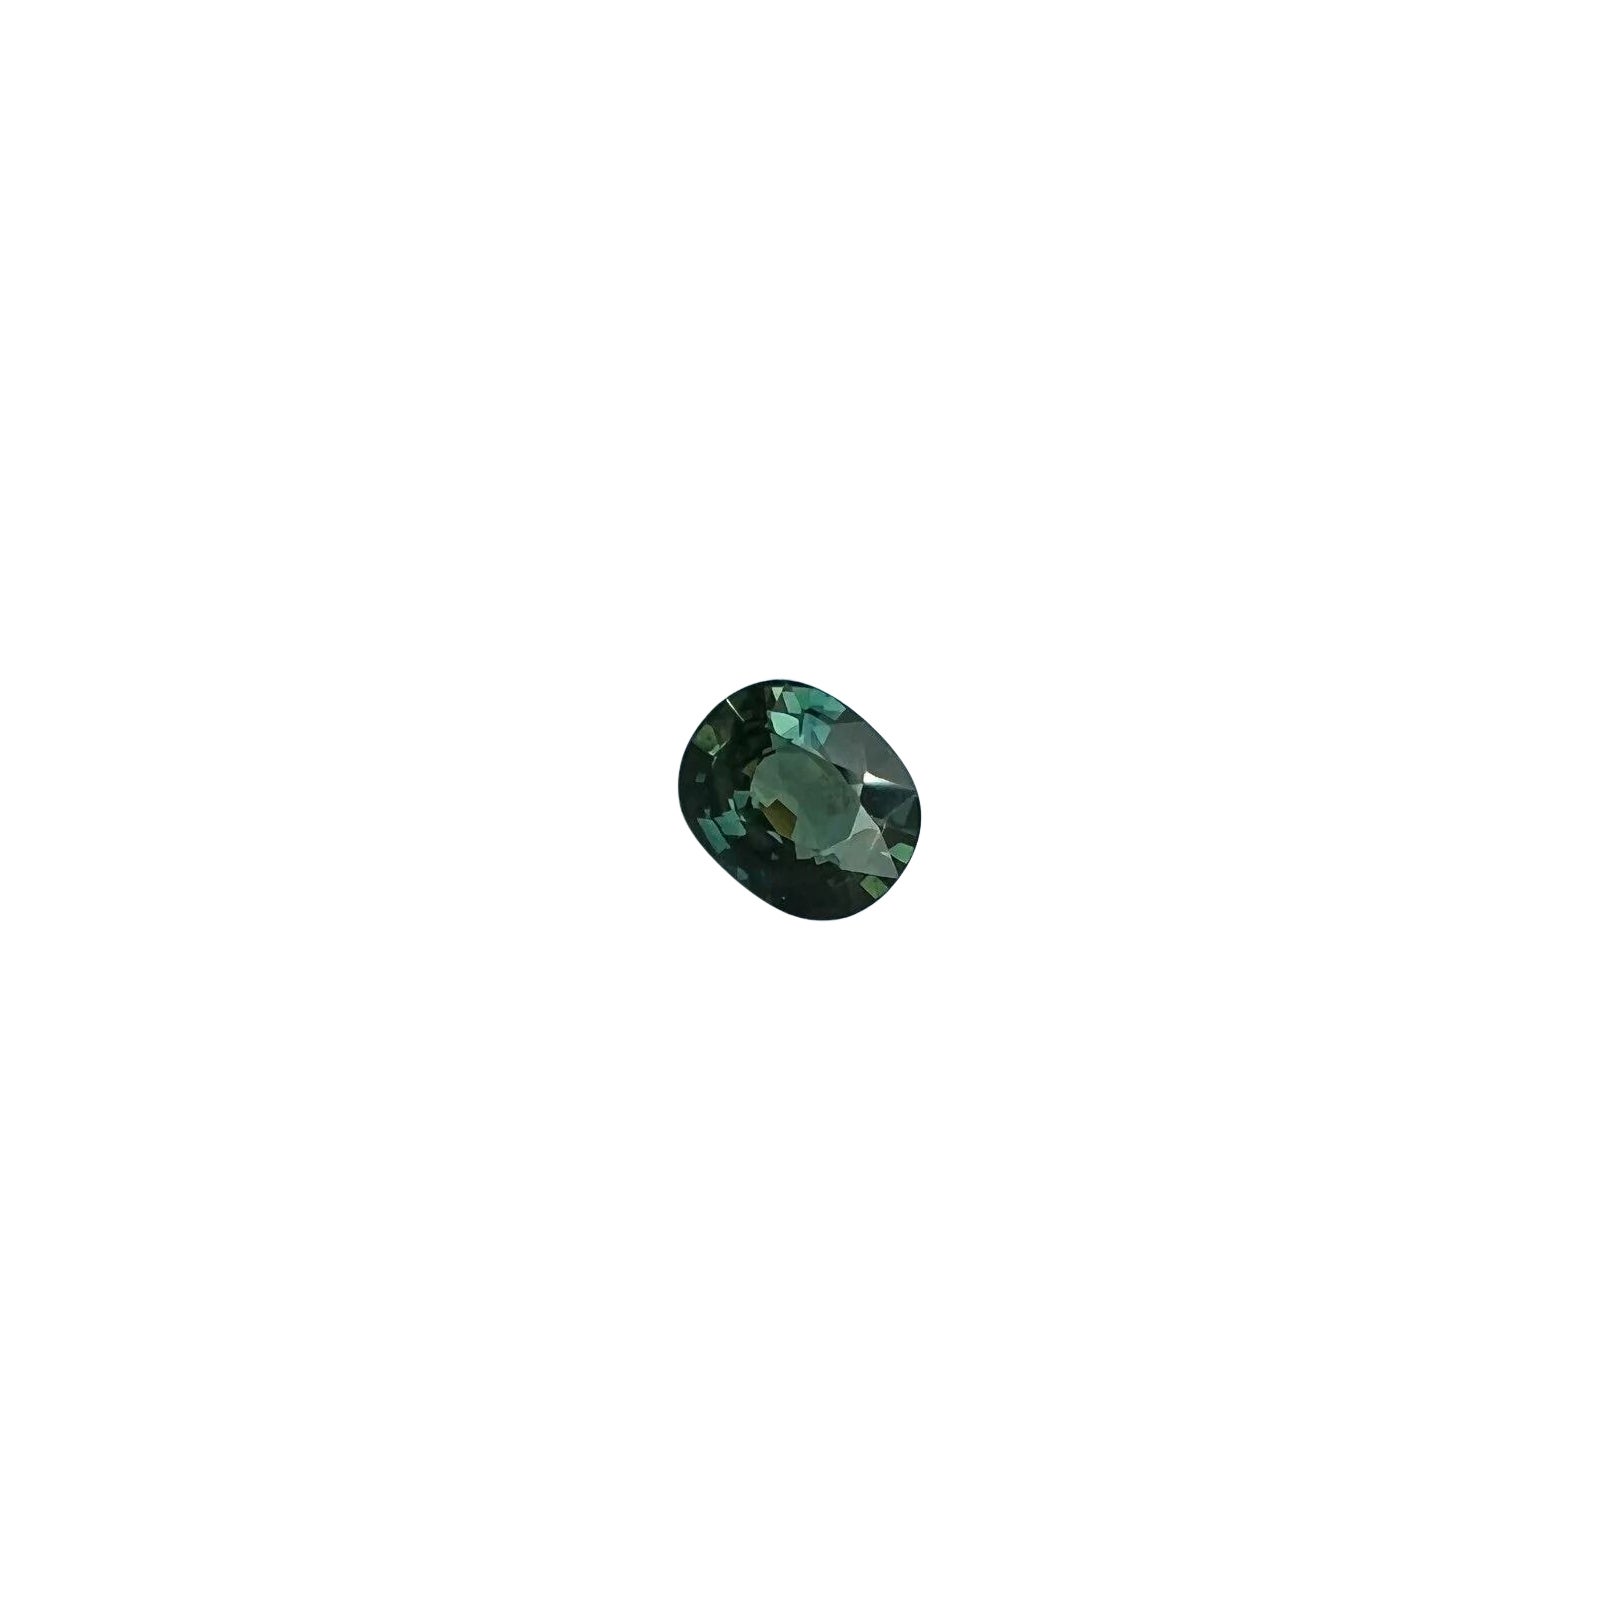 1.15ct Fine Deep Green Blue Teal Untreated Sapphire Oval Cut IGI Certified Gem For Sale